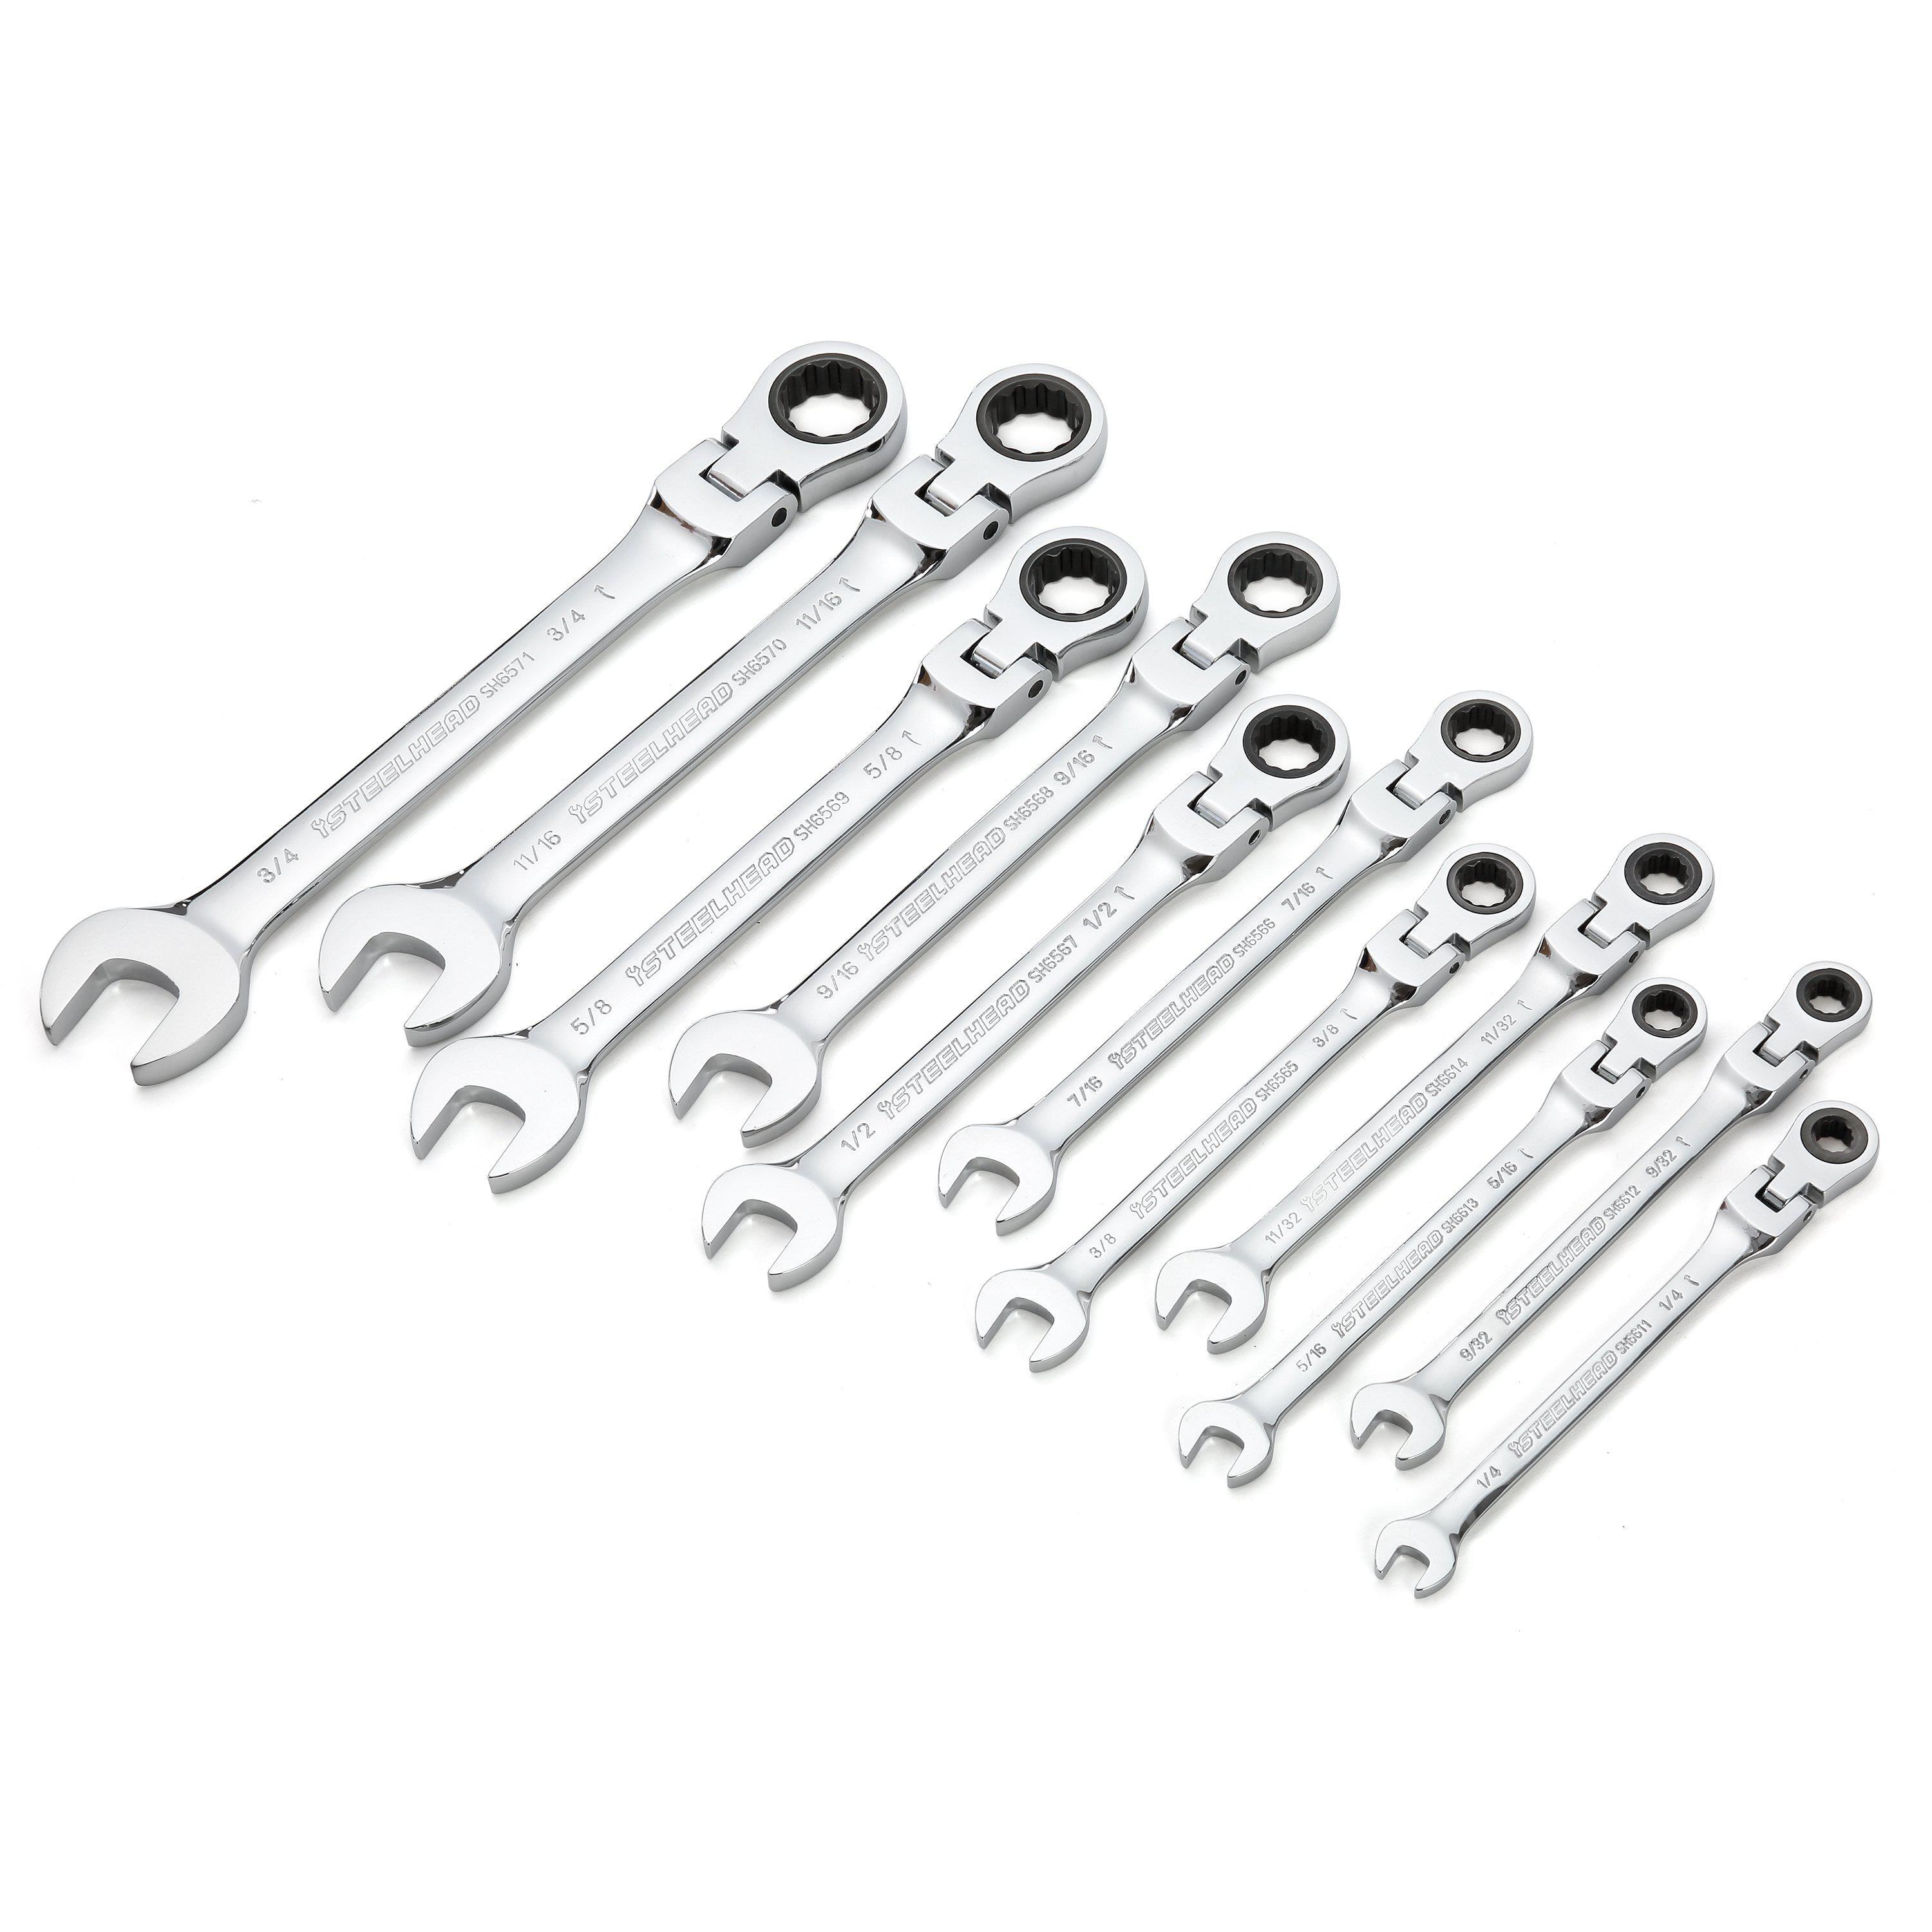 WORKPRO 5-Piece Hammer Set, Forged & Polished Steel Head, Fiberglass  Handle, 32oz Rubber Mallet | 16oz Claw Hammer | 3lb Sledge Hammer | 16oz  Ball